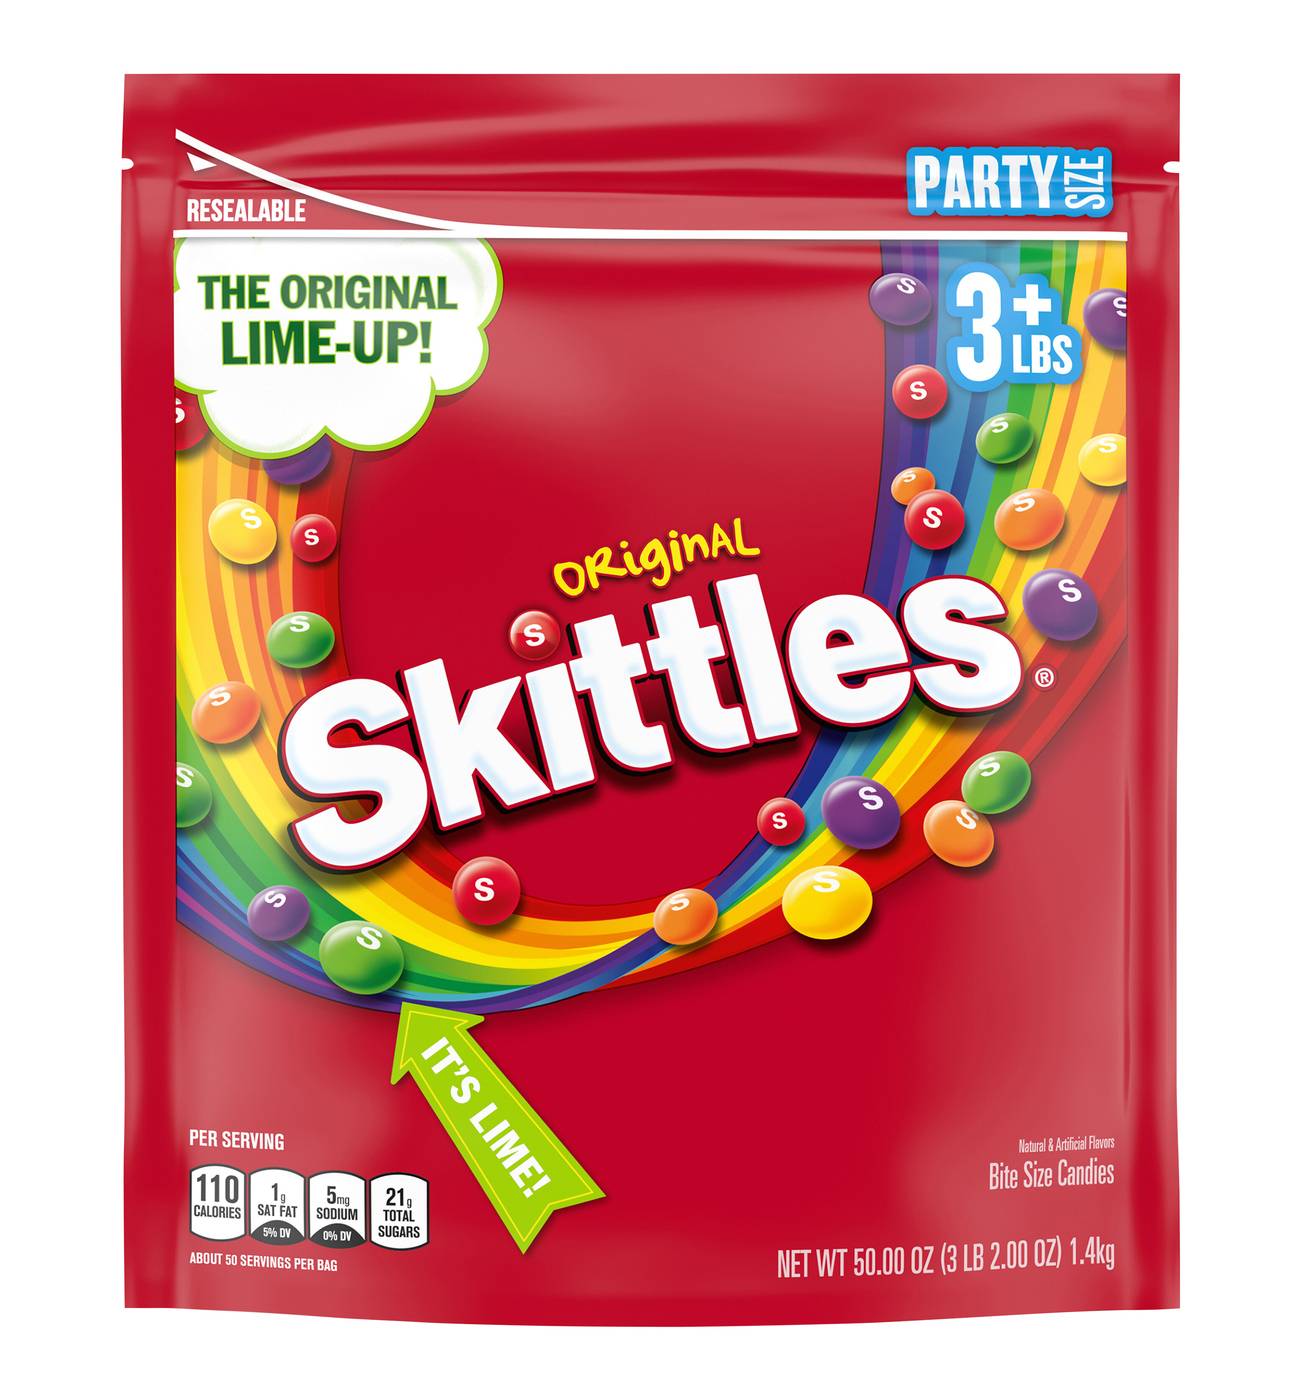 Skittles Original Gummies - Shop Candy at H-E-B